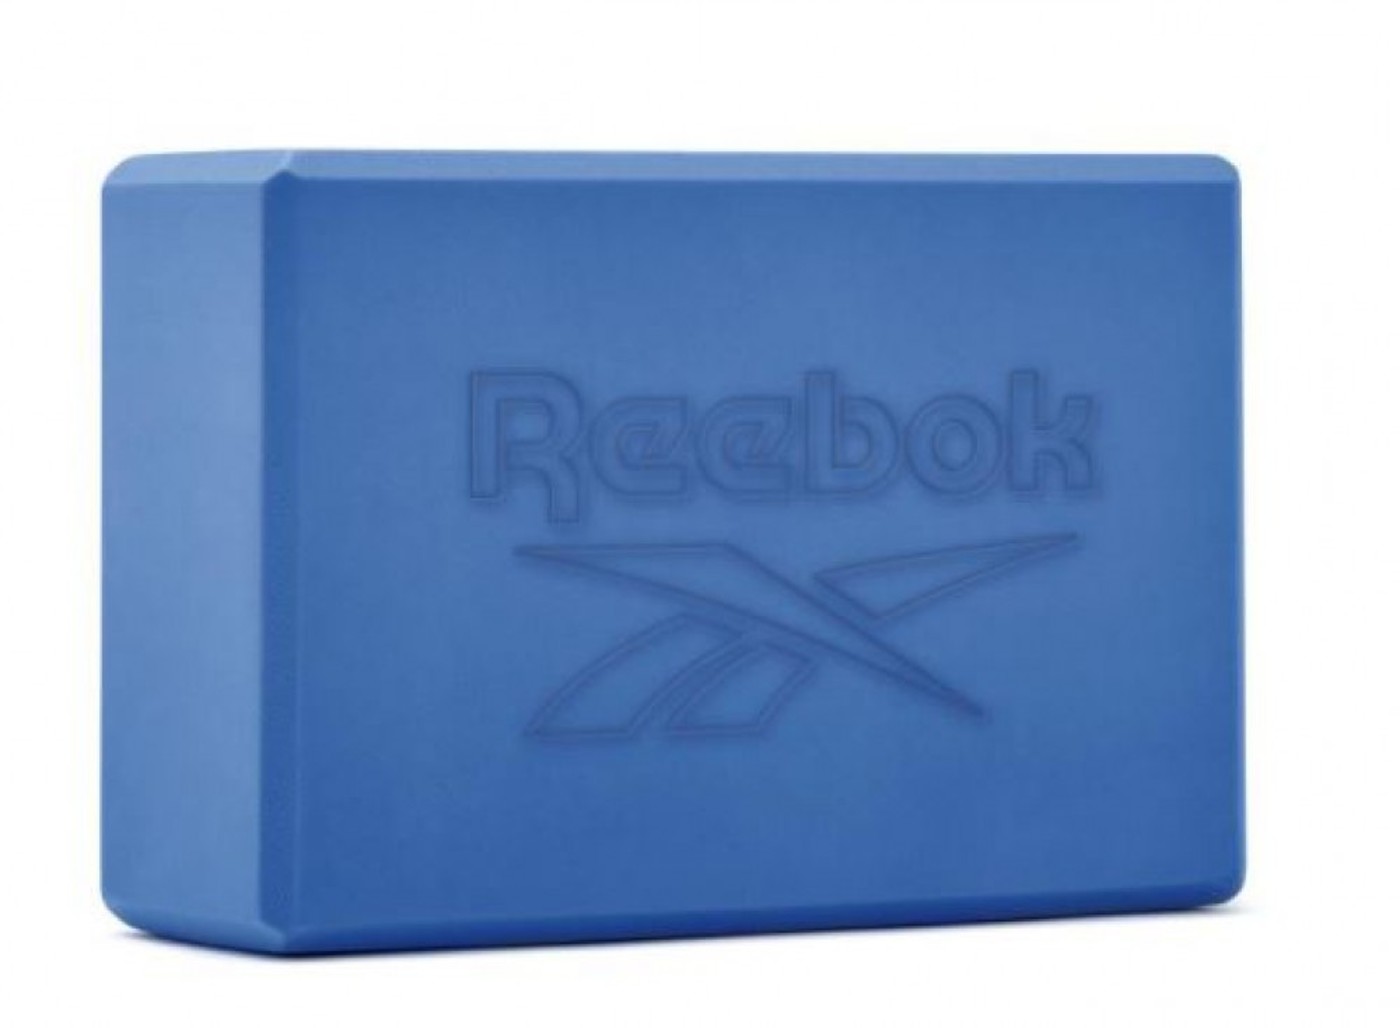 REEBOK Yoga Block - Blue